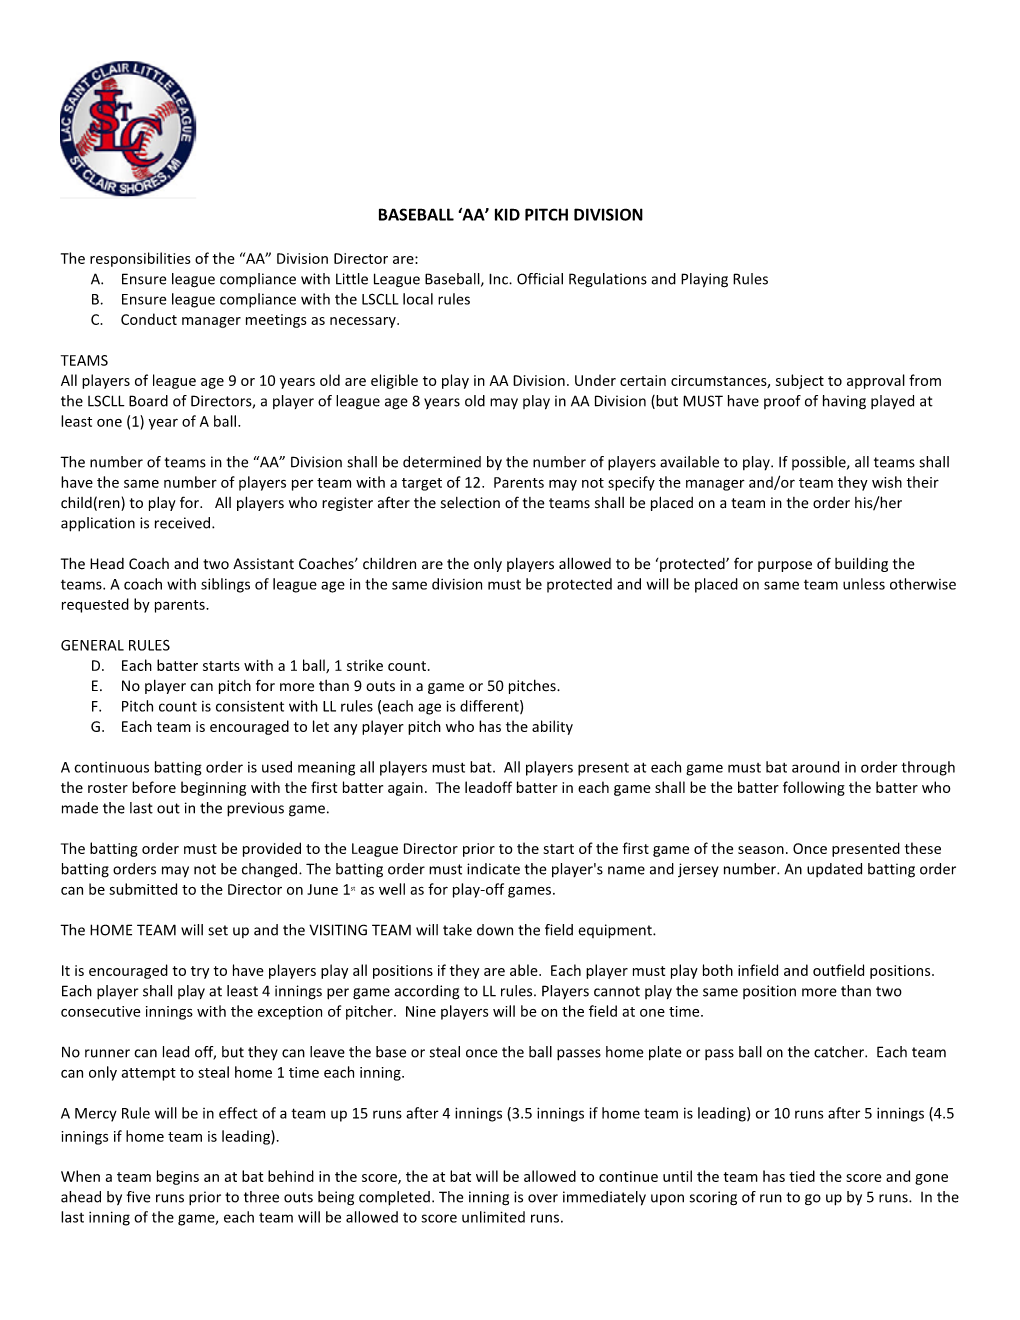 2021 Baseball 'AA' Kid Pitch Division Rules